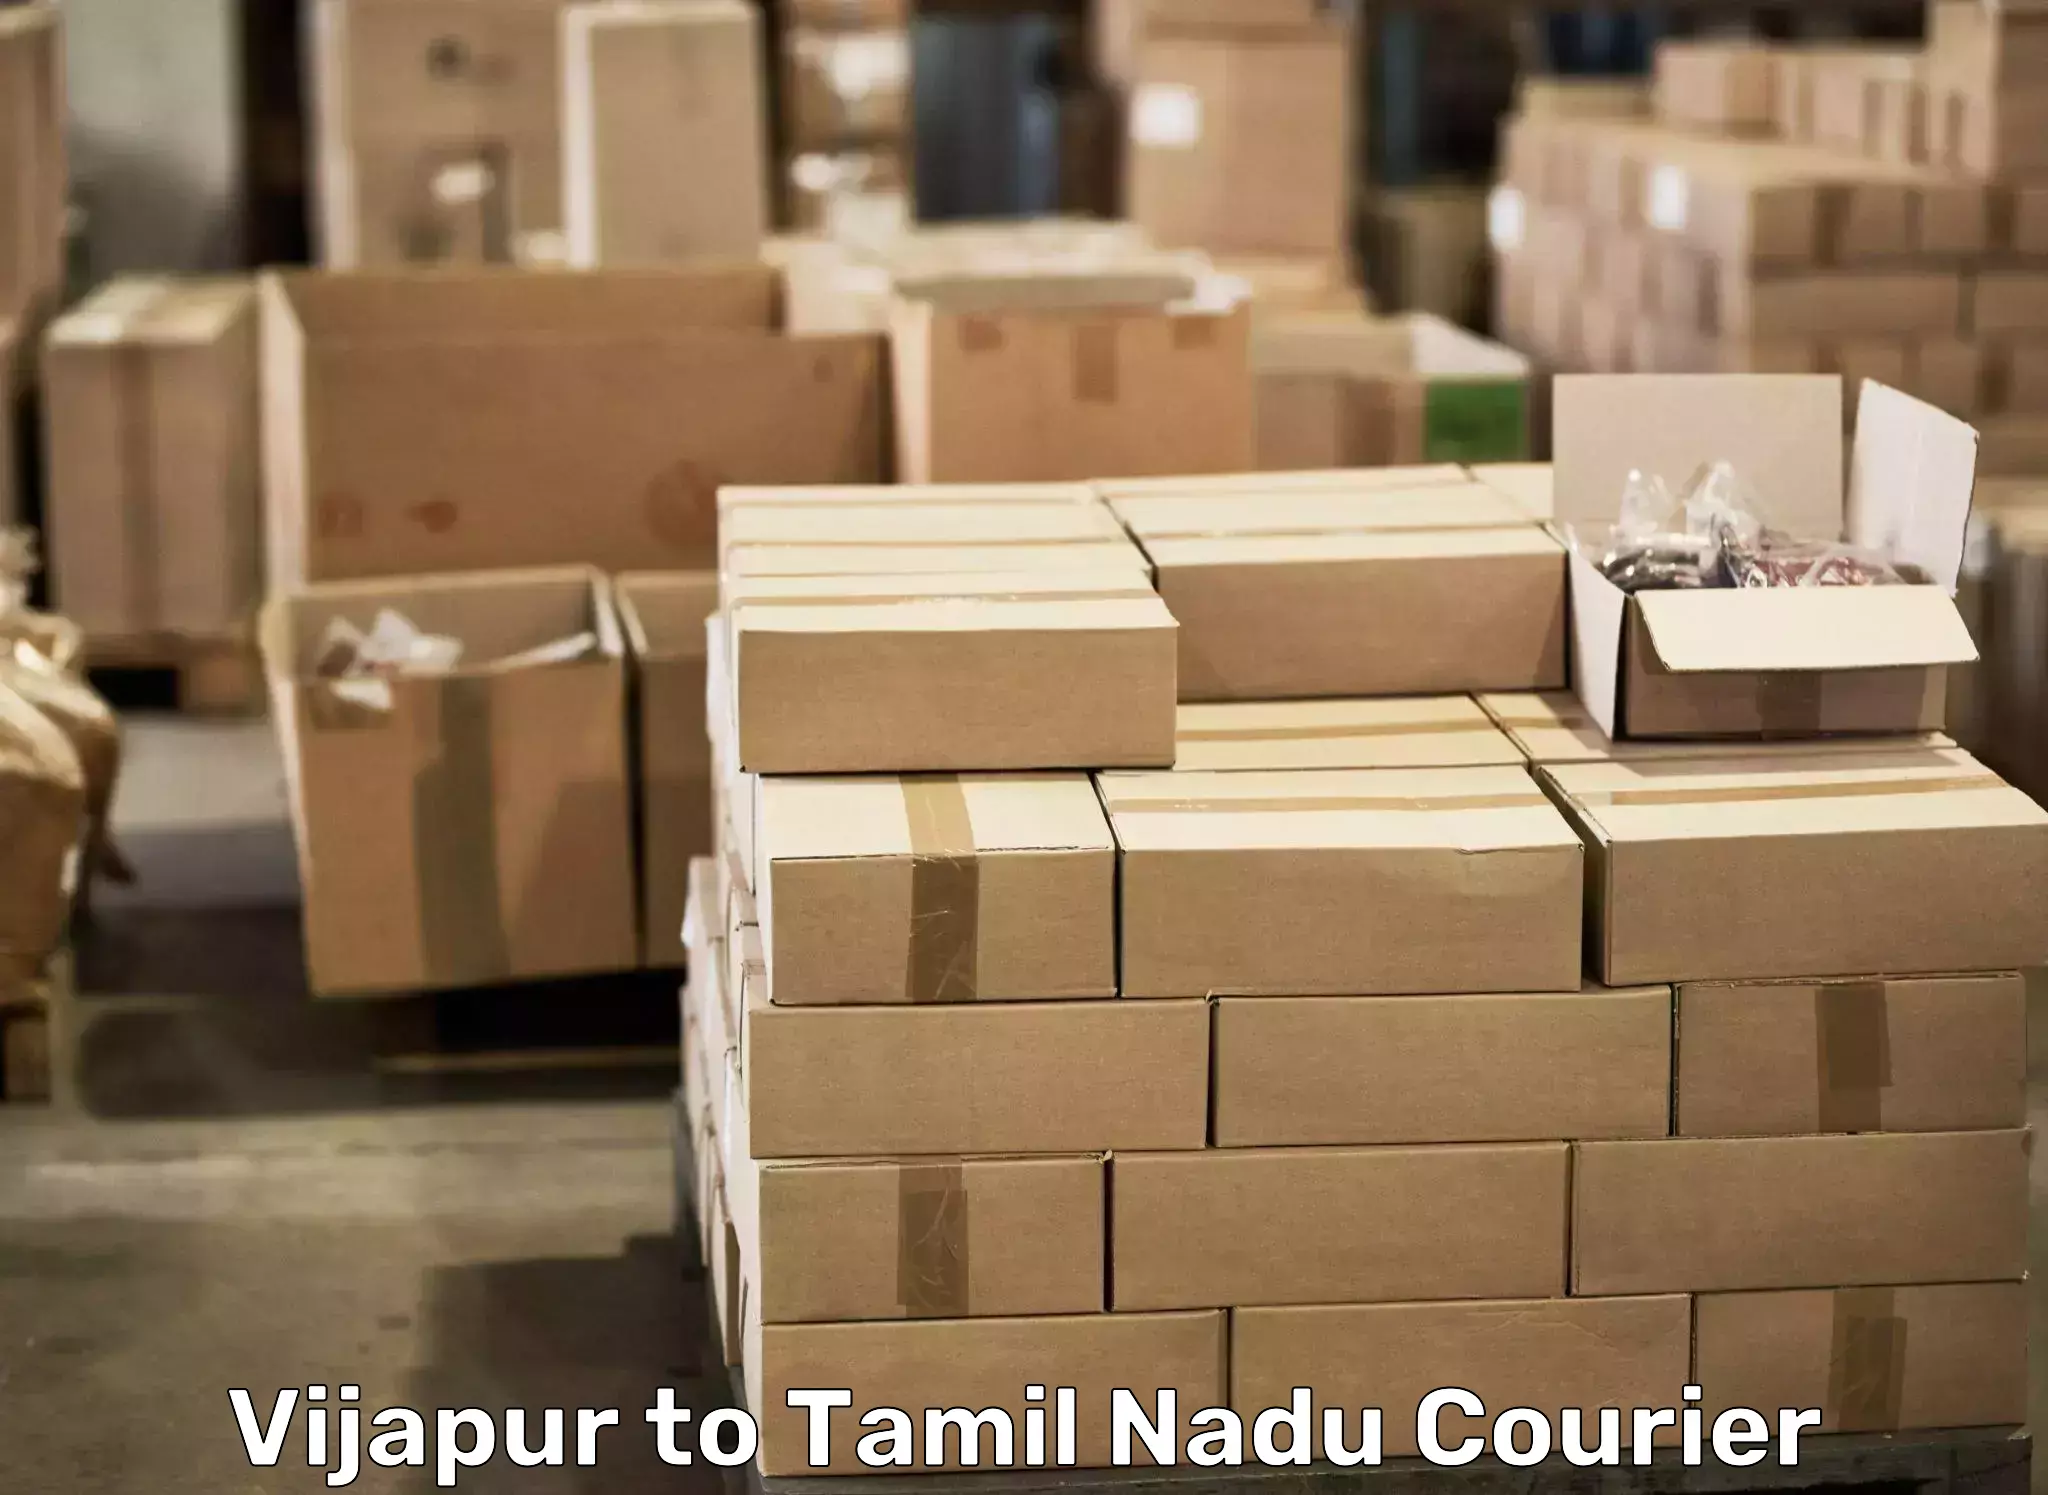 Moving and handling services in Vijapur to Thiruvadanai